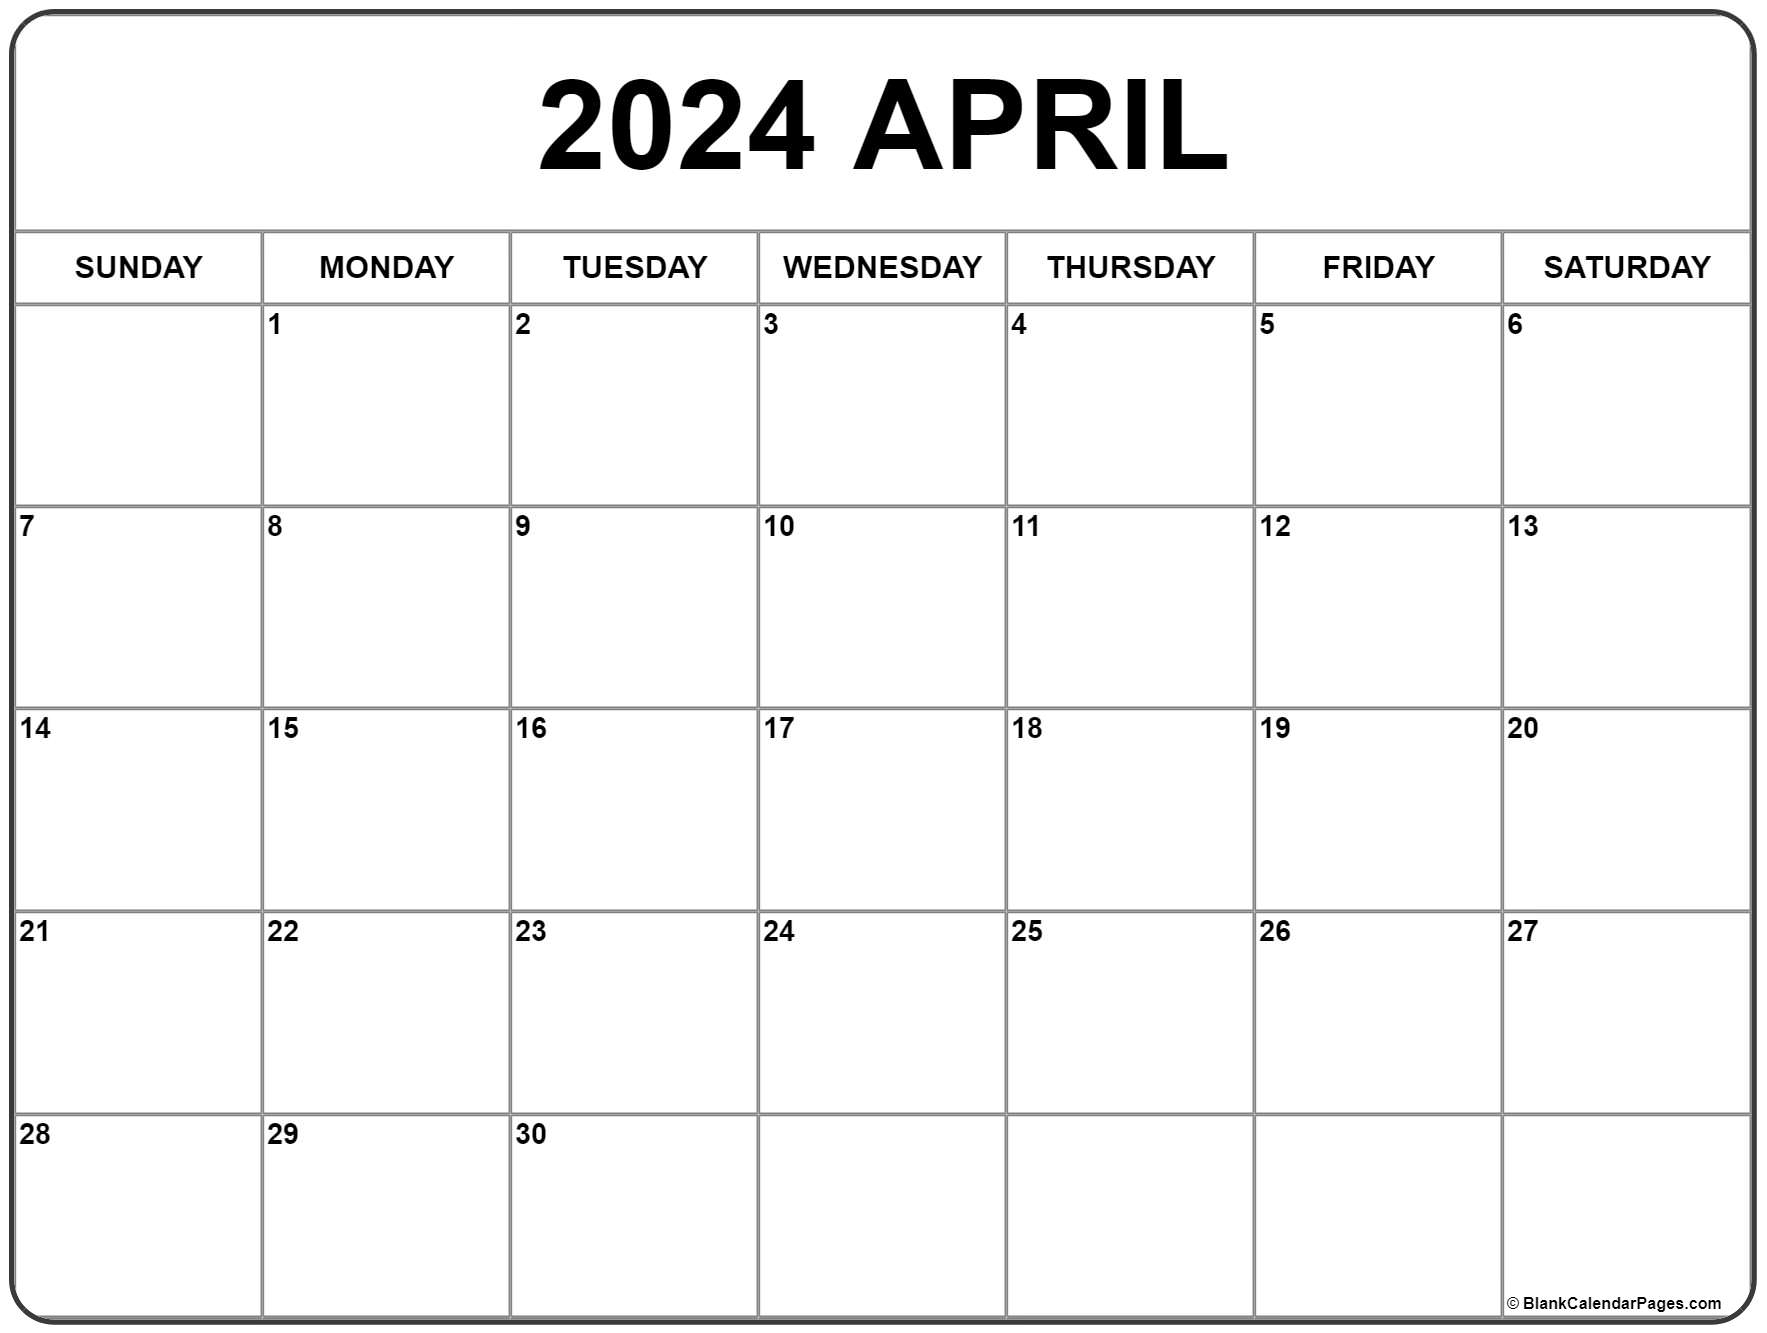 April 2024 Calendar | Free Printable Calendar in April 2024 Calendar Blank